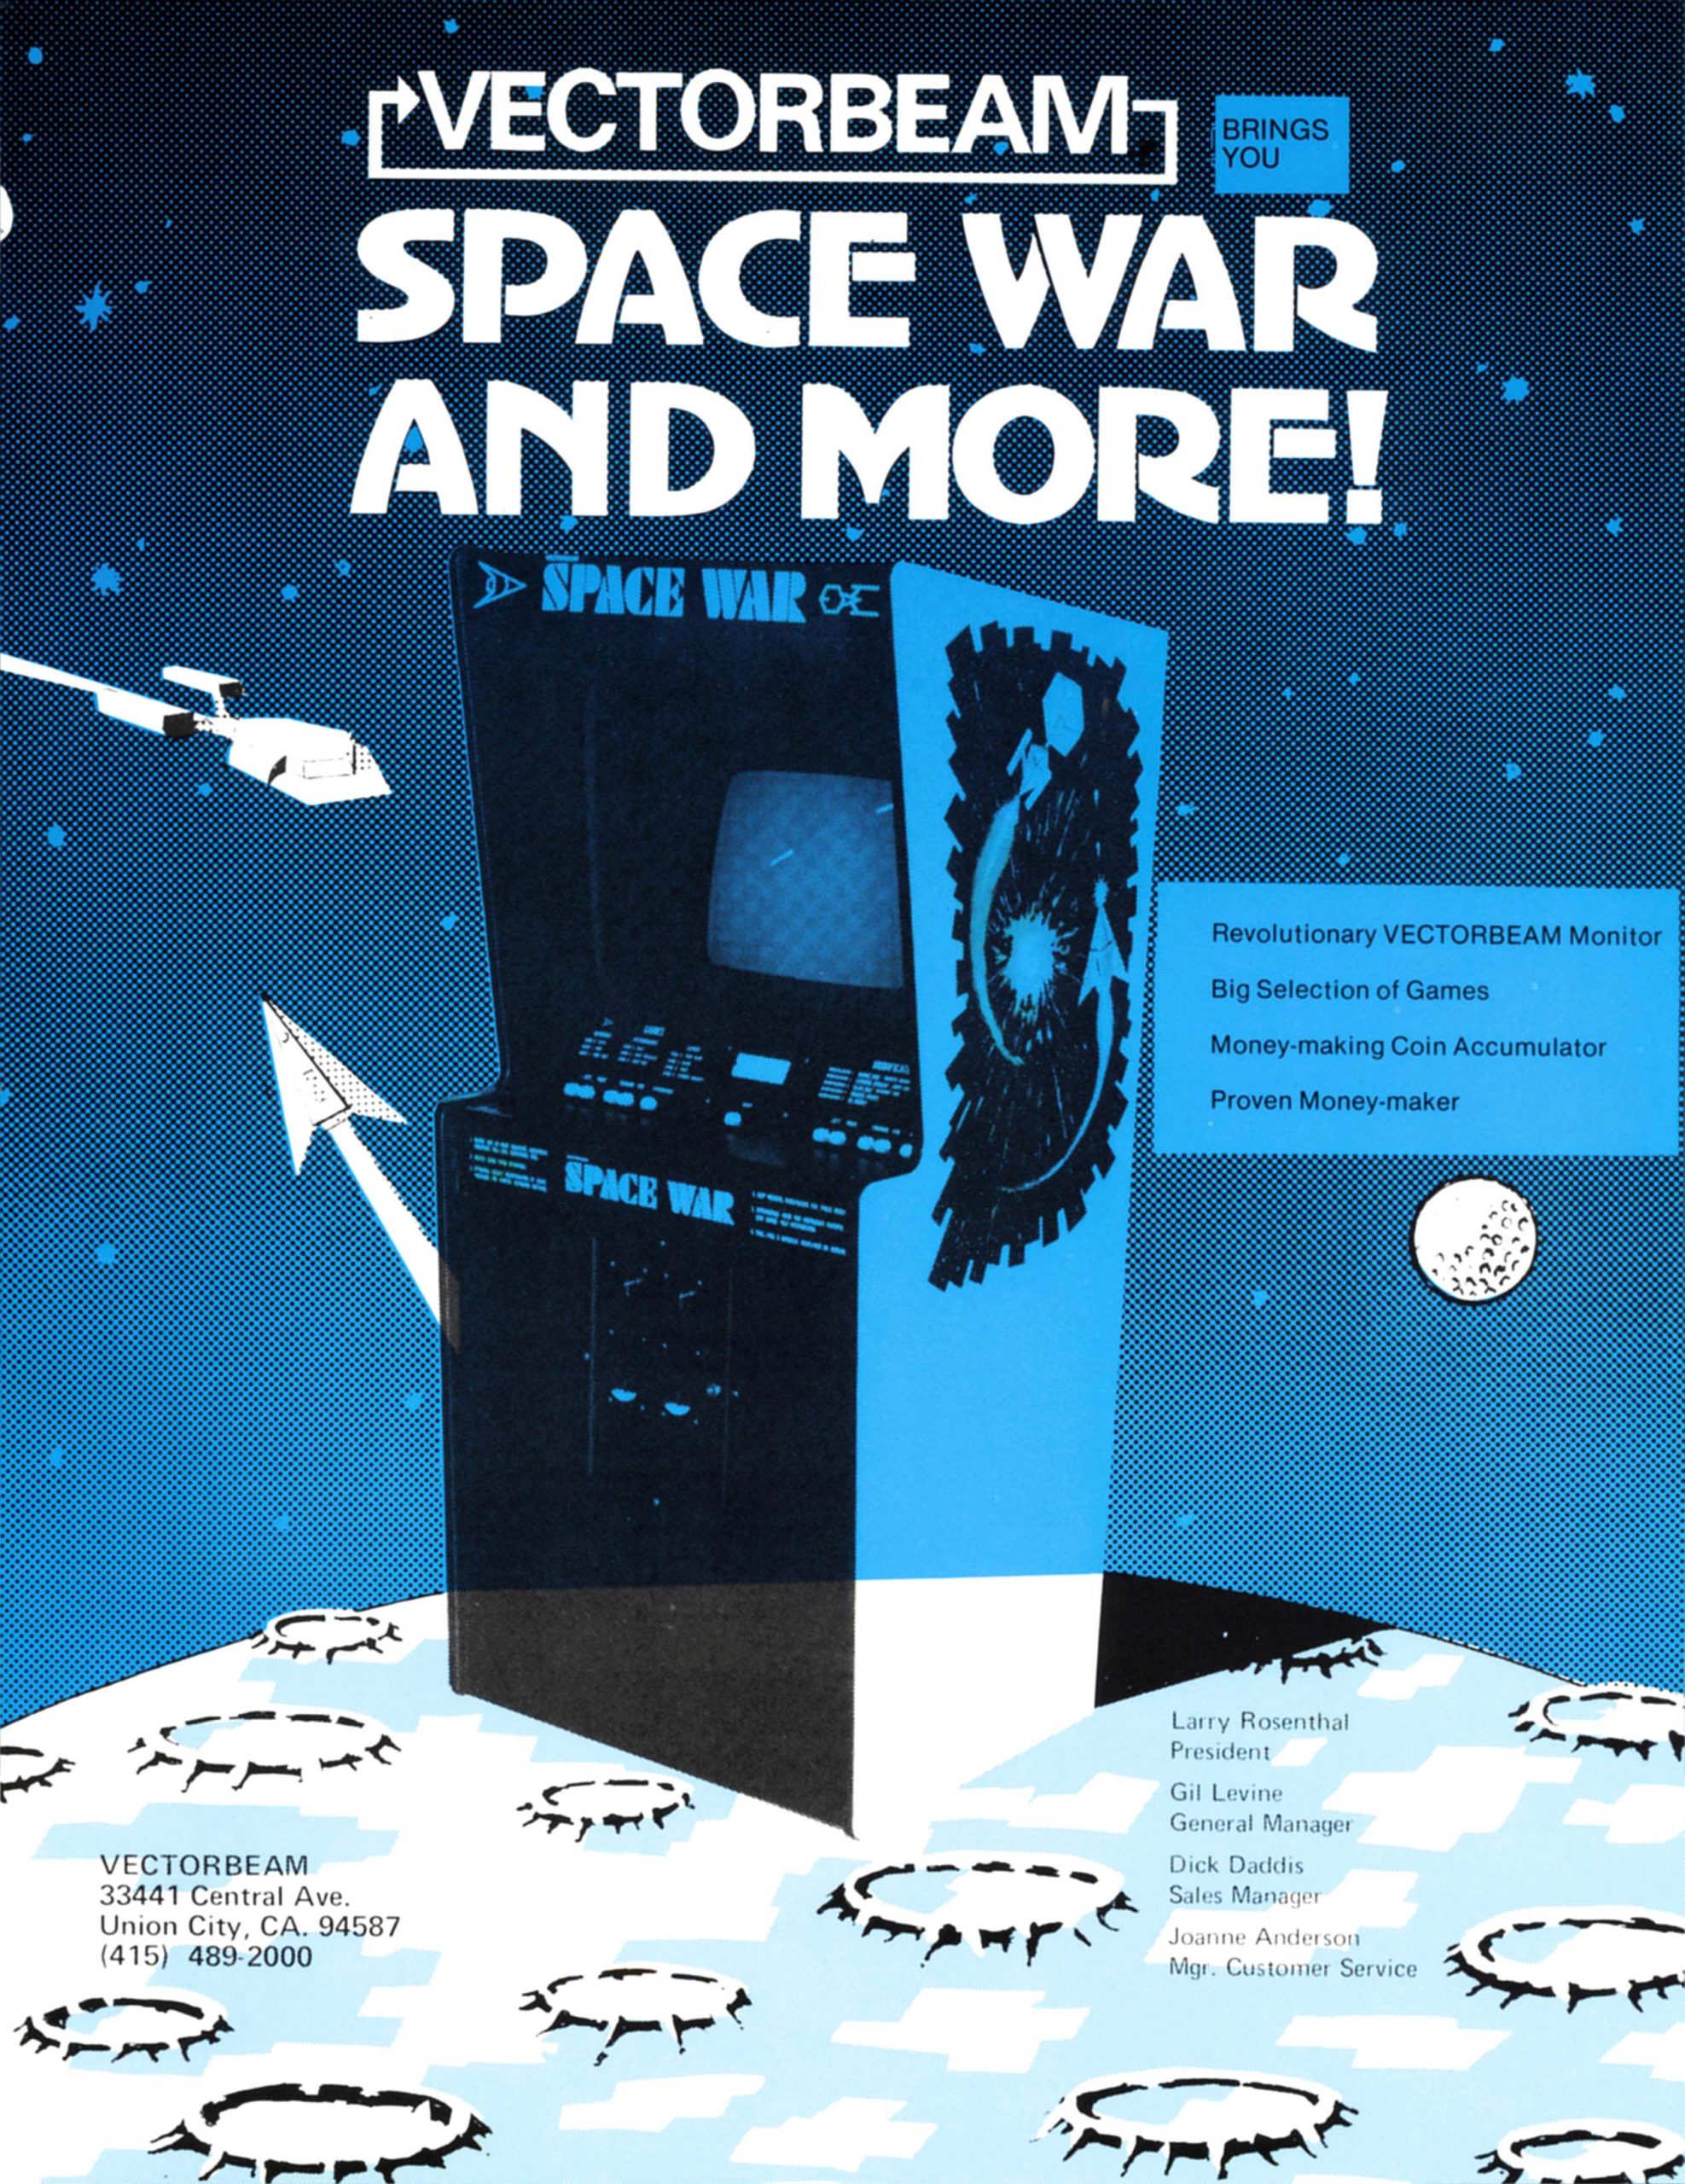 Space War, arcade game maker Vectorbeam's version of Space Wars